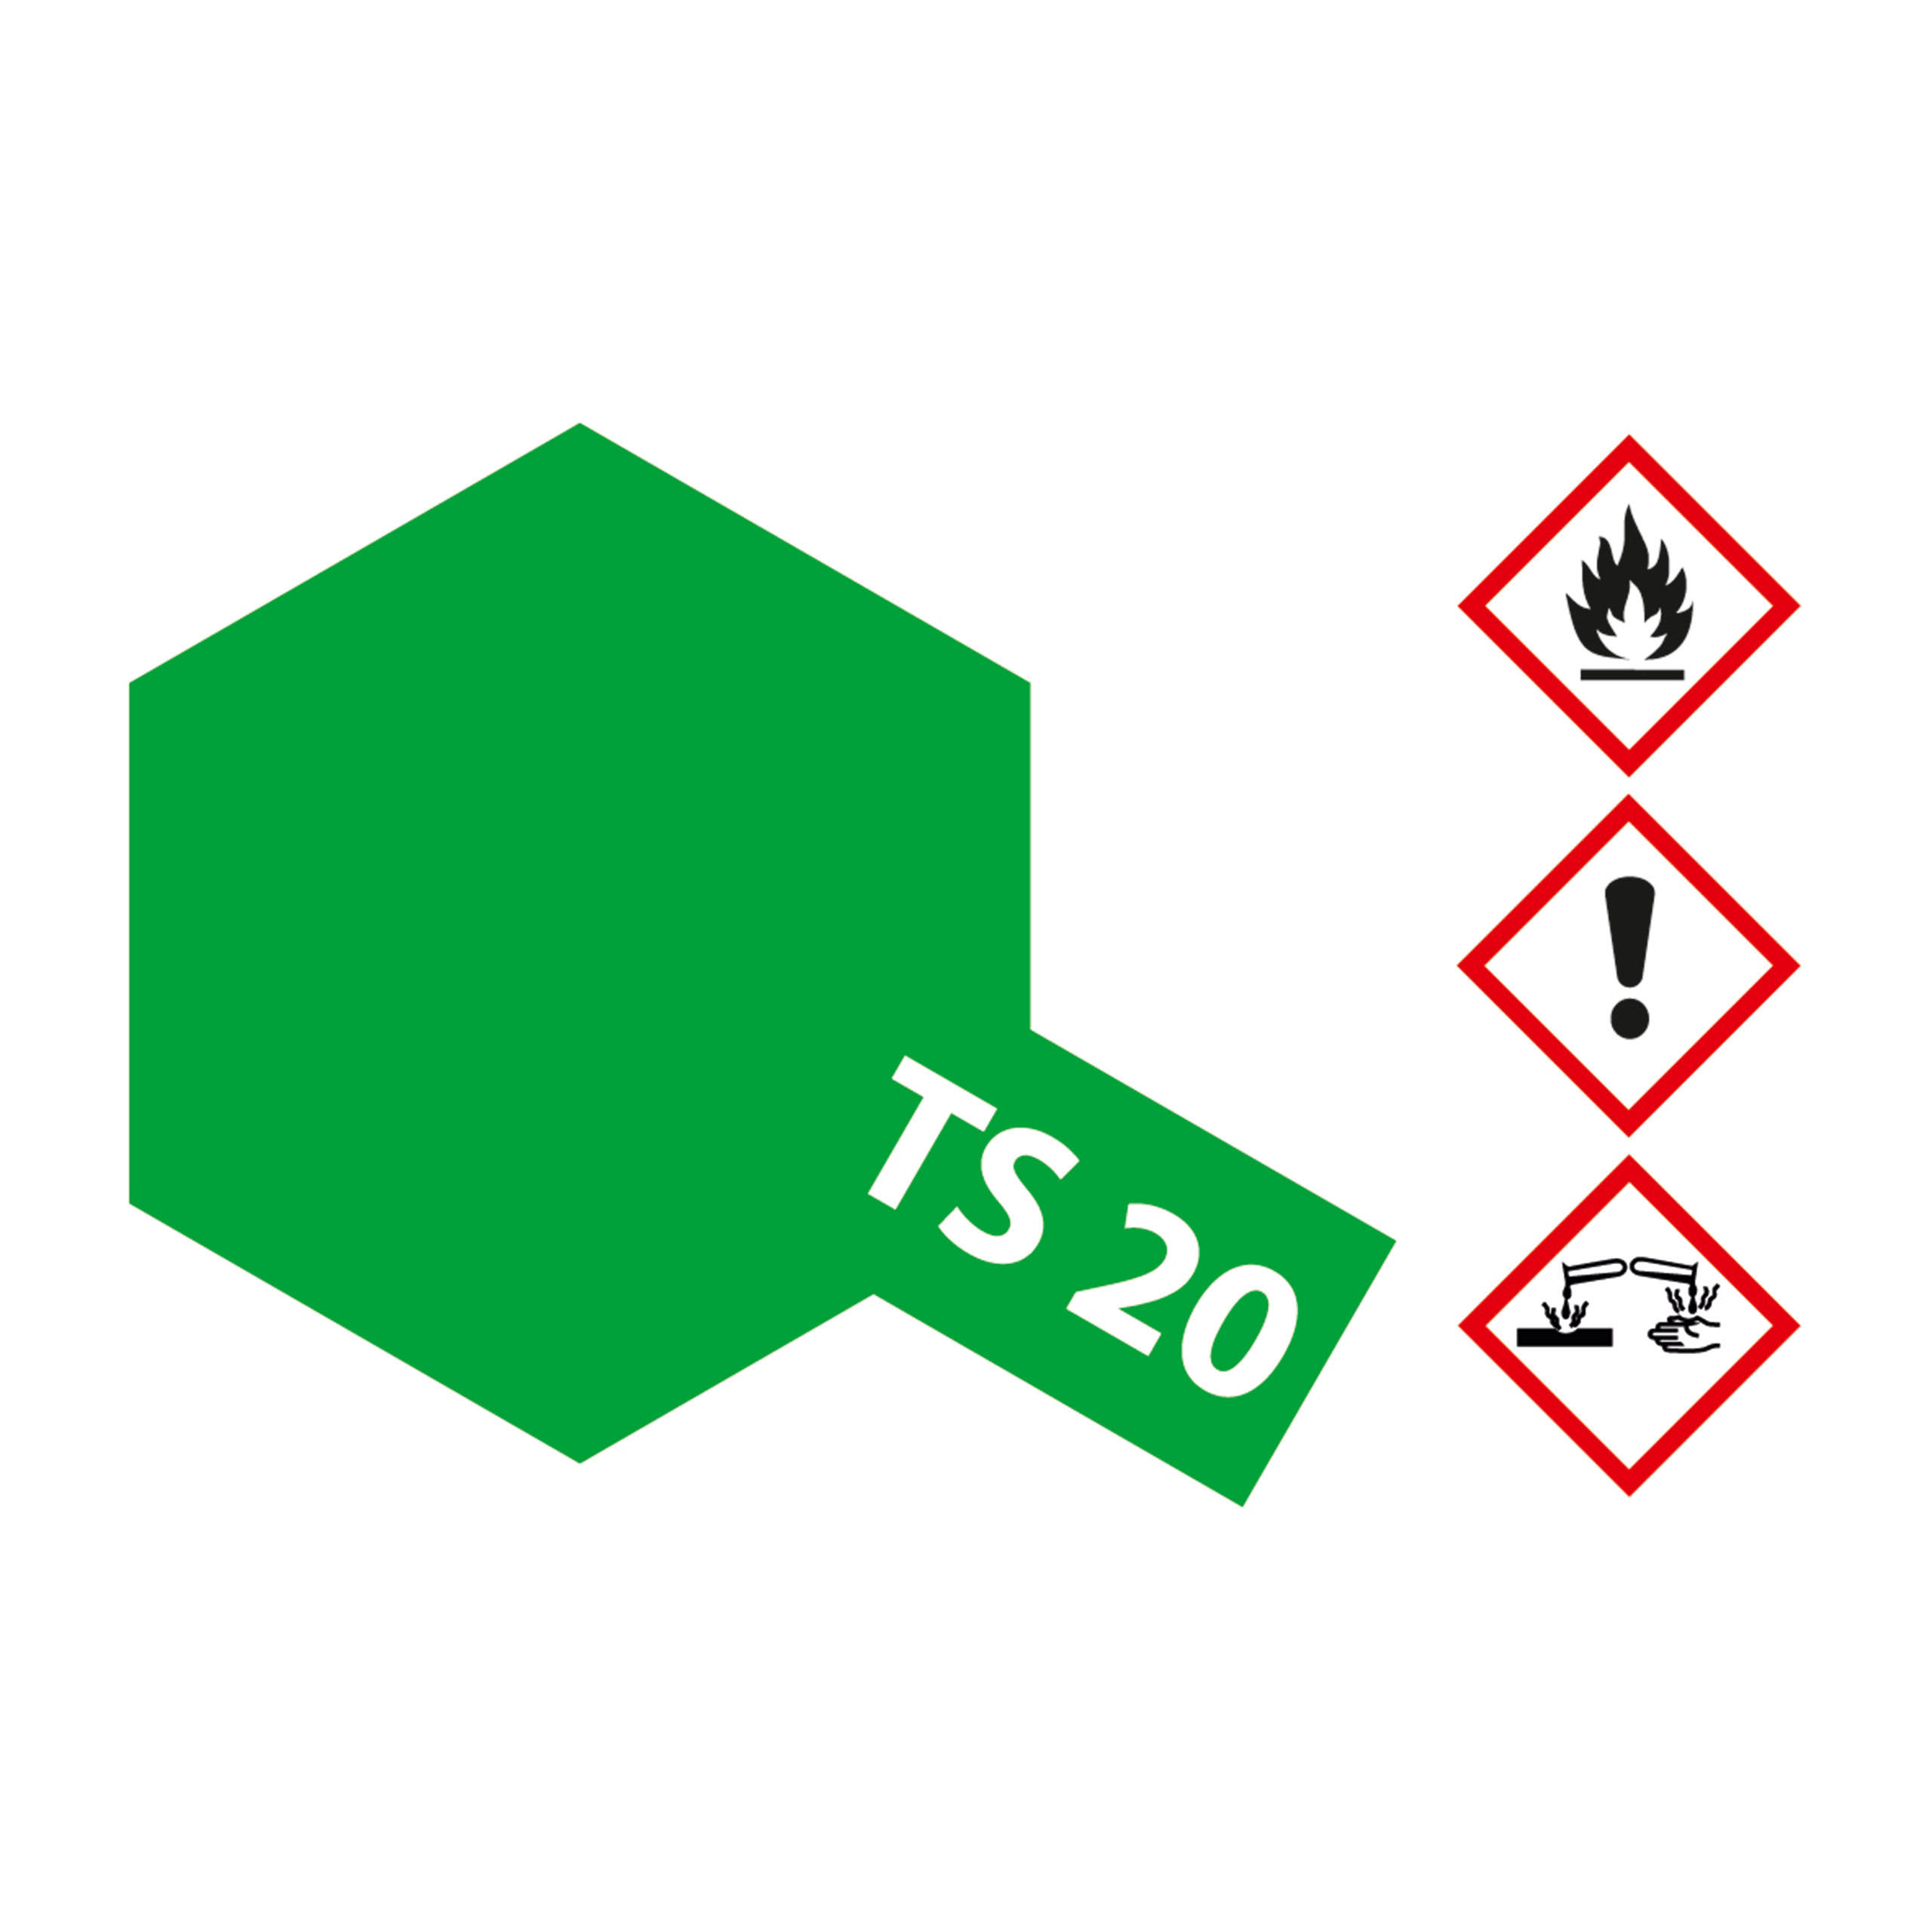 Tamiya Spray Lacquer - TS-20 Metallic Green, 3oz